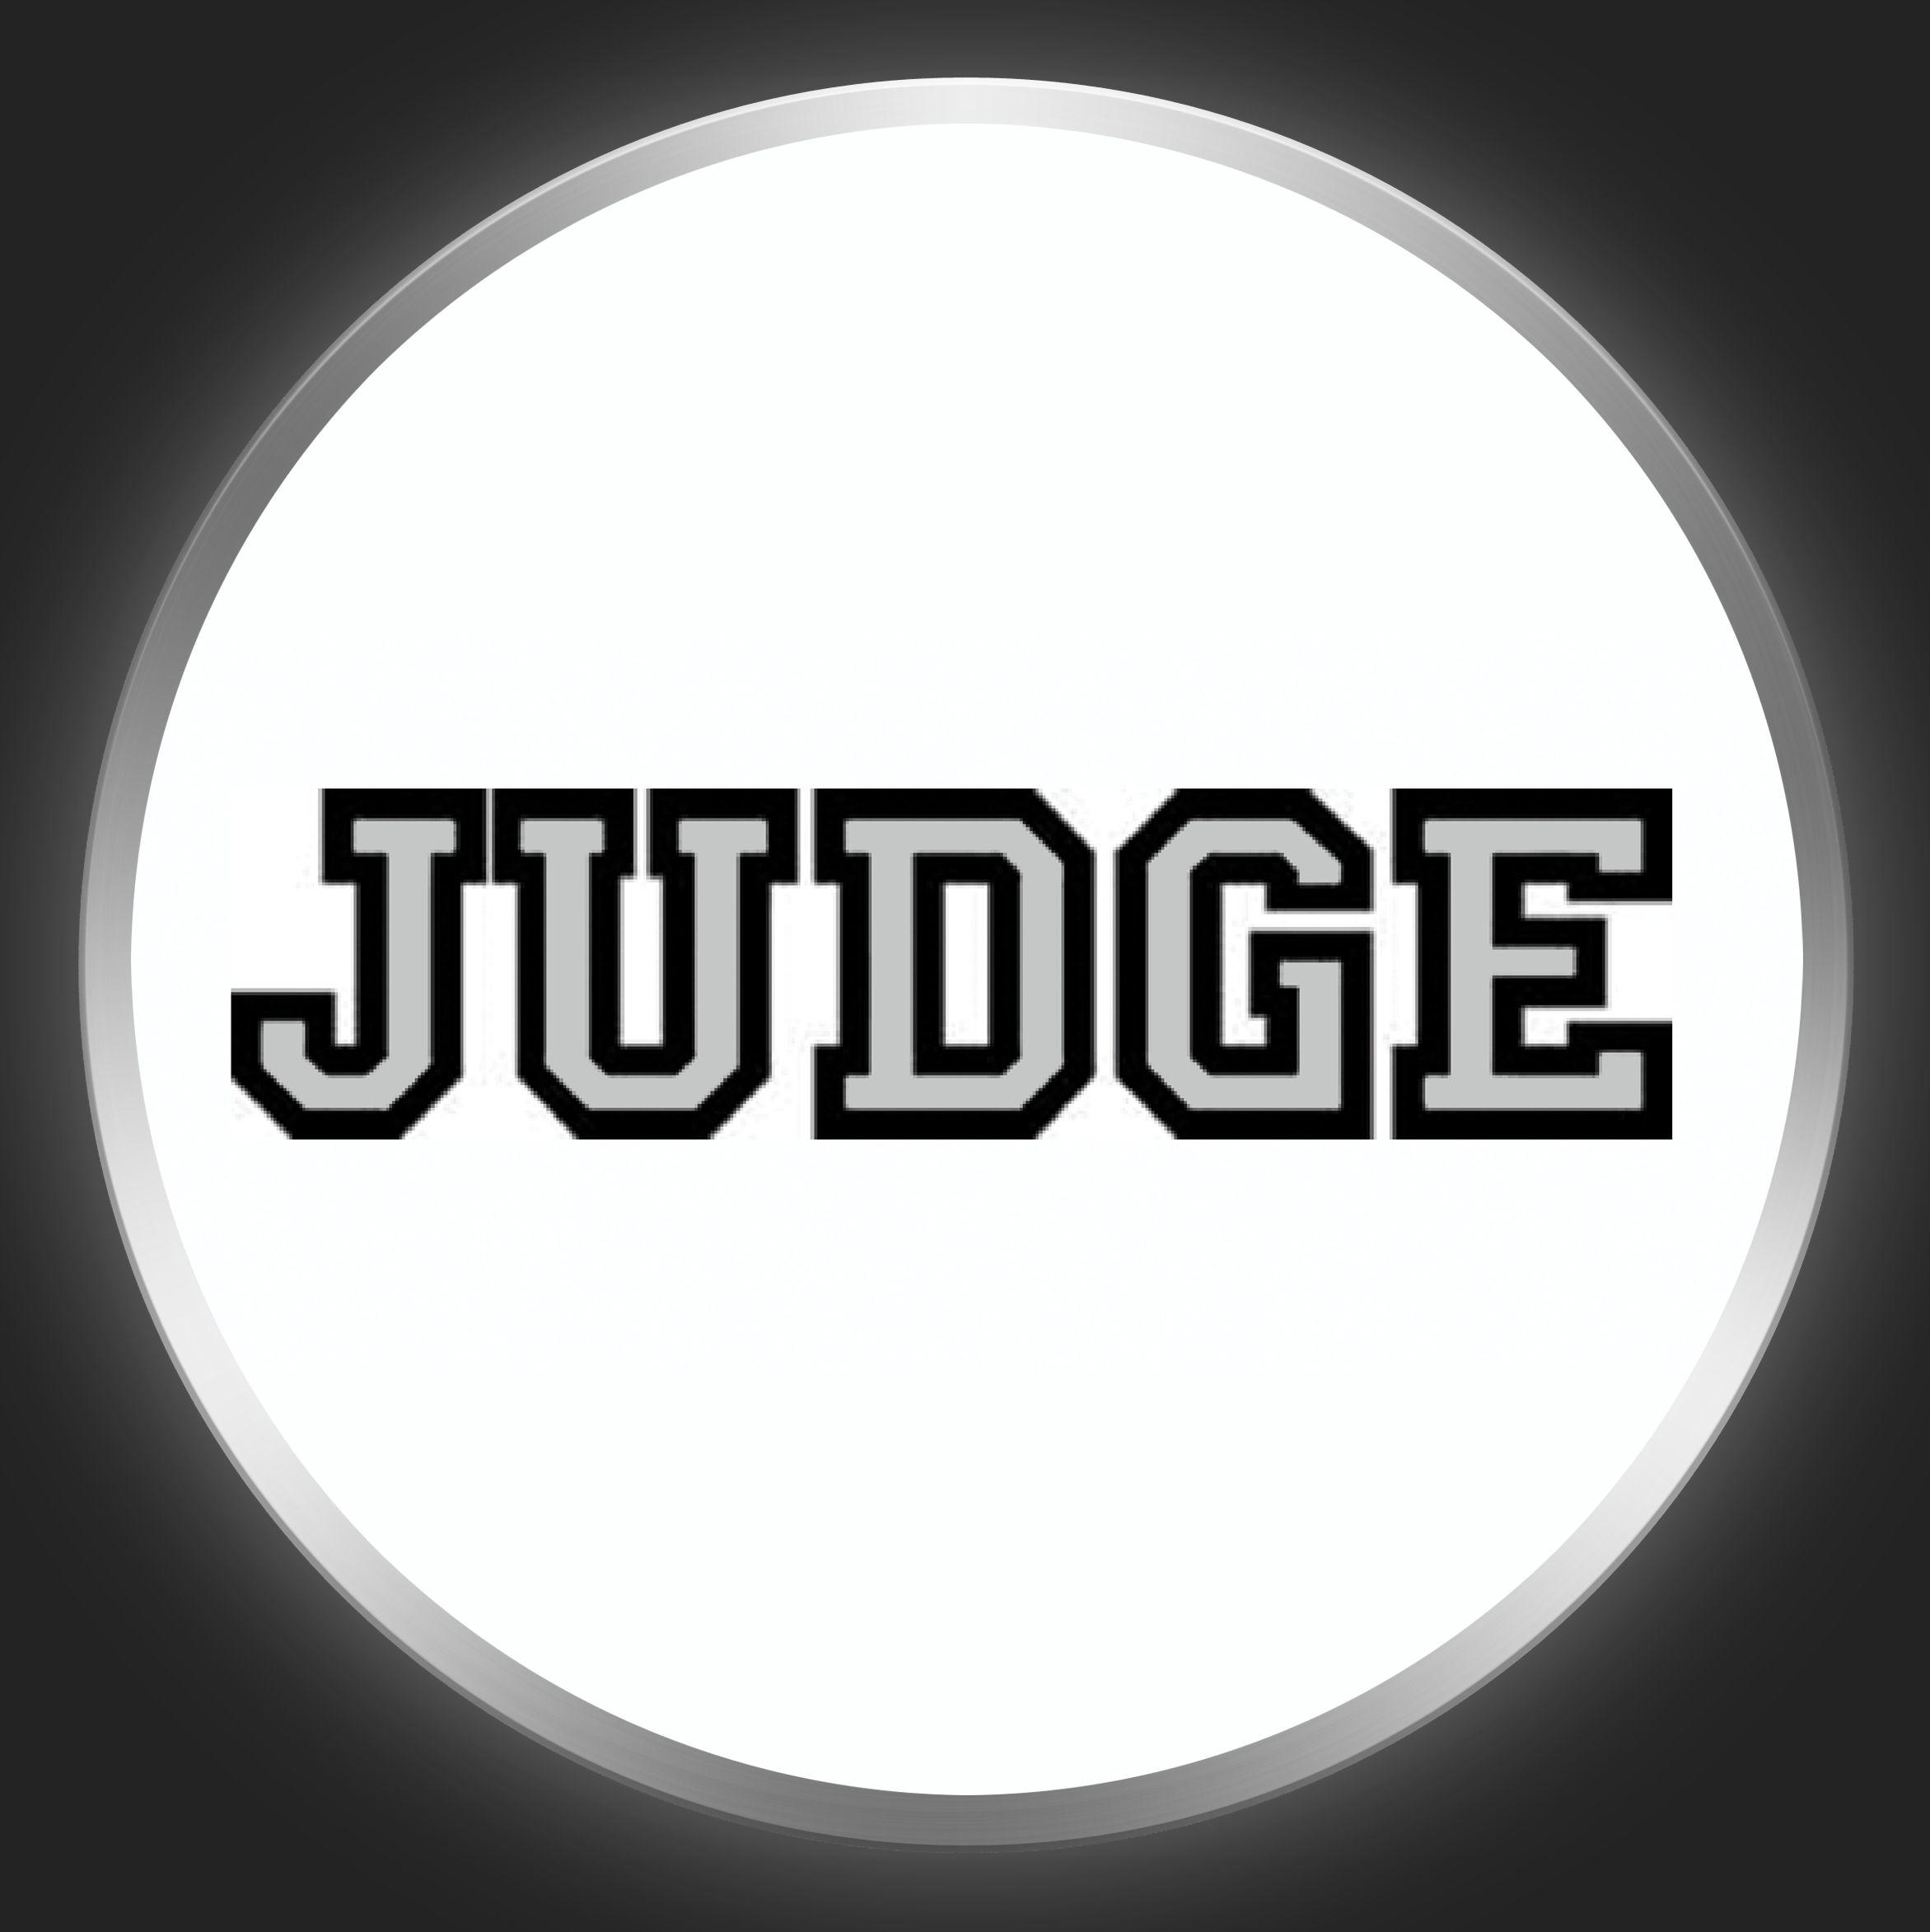 Judge Logo - JUDGE - Black / Grey Logo On White Button-